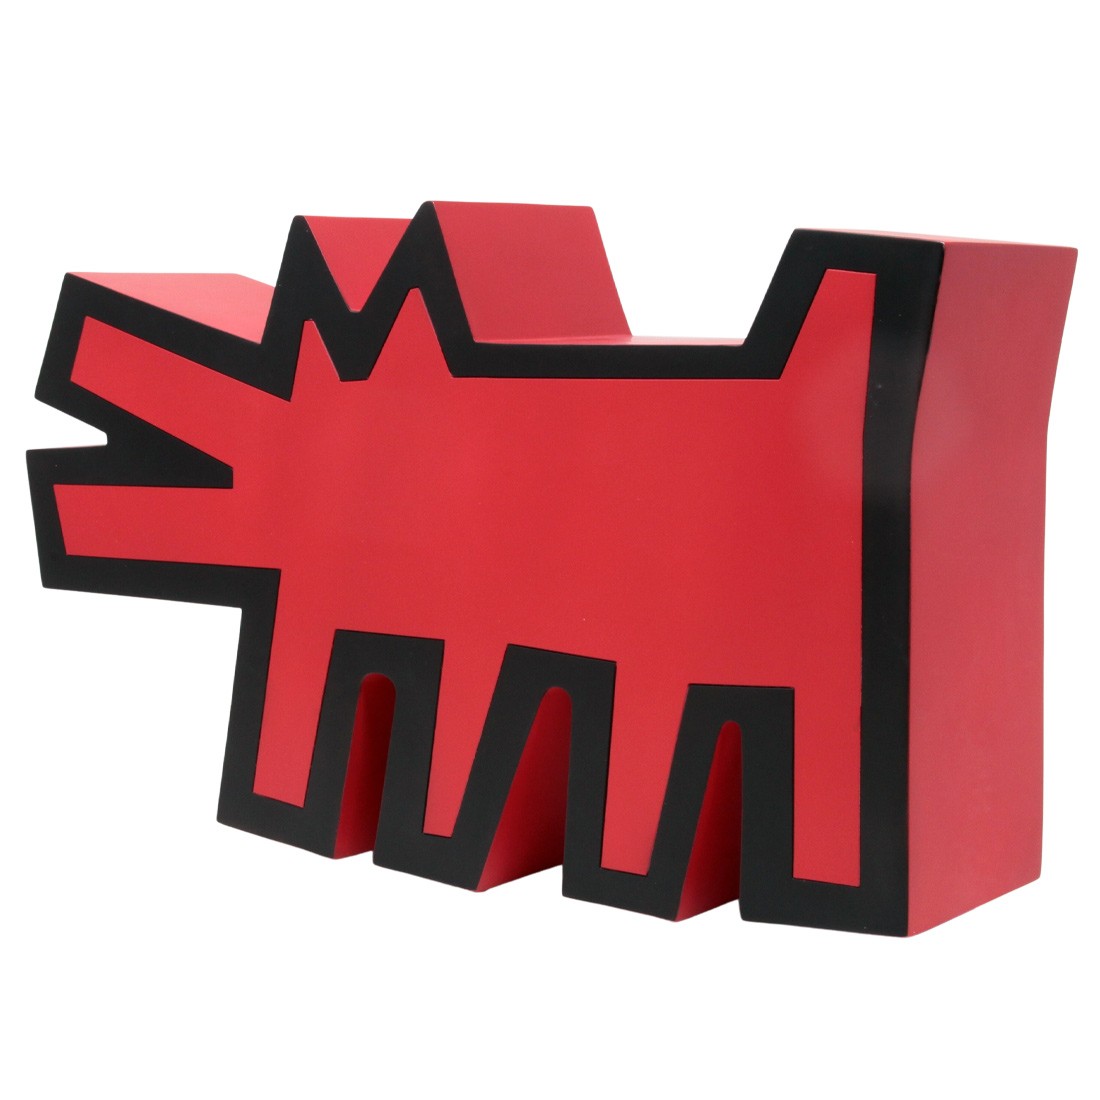 Medicom Keith Haring Barking Dog Original Ver. Statue red